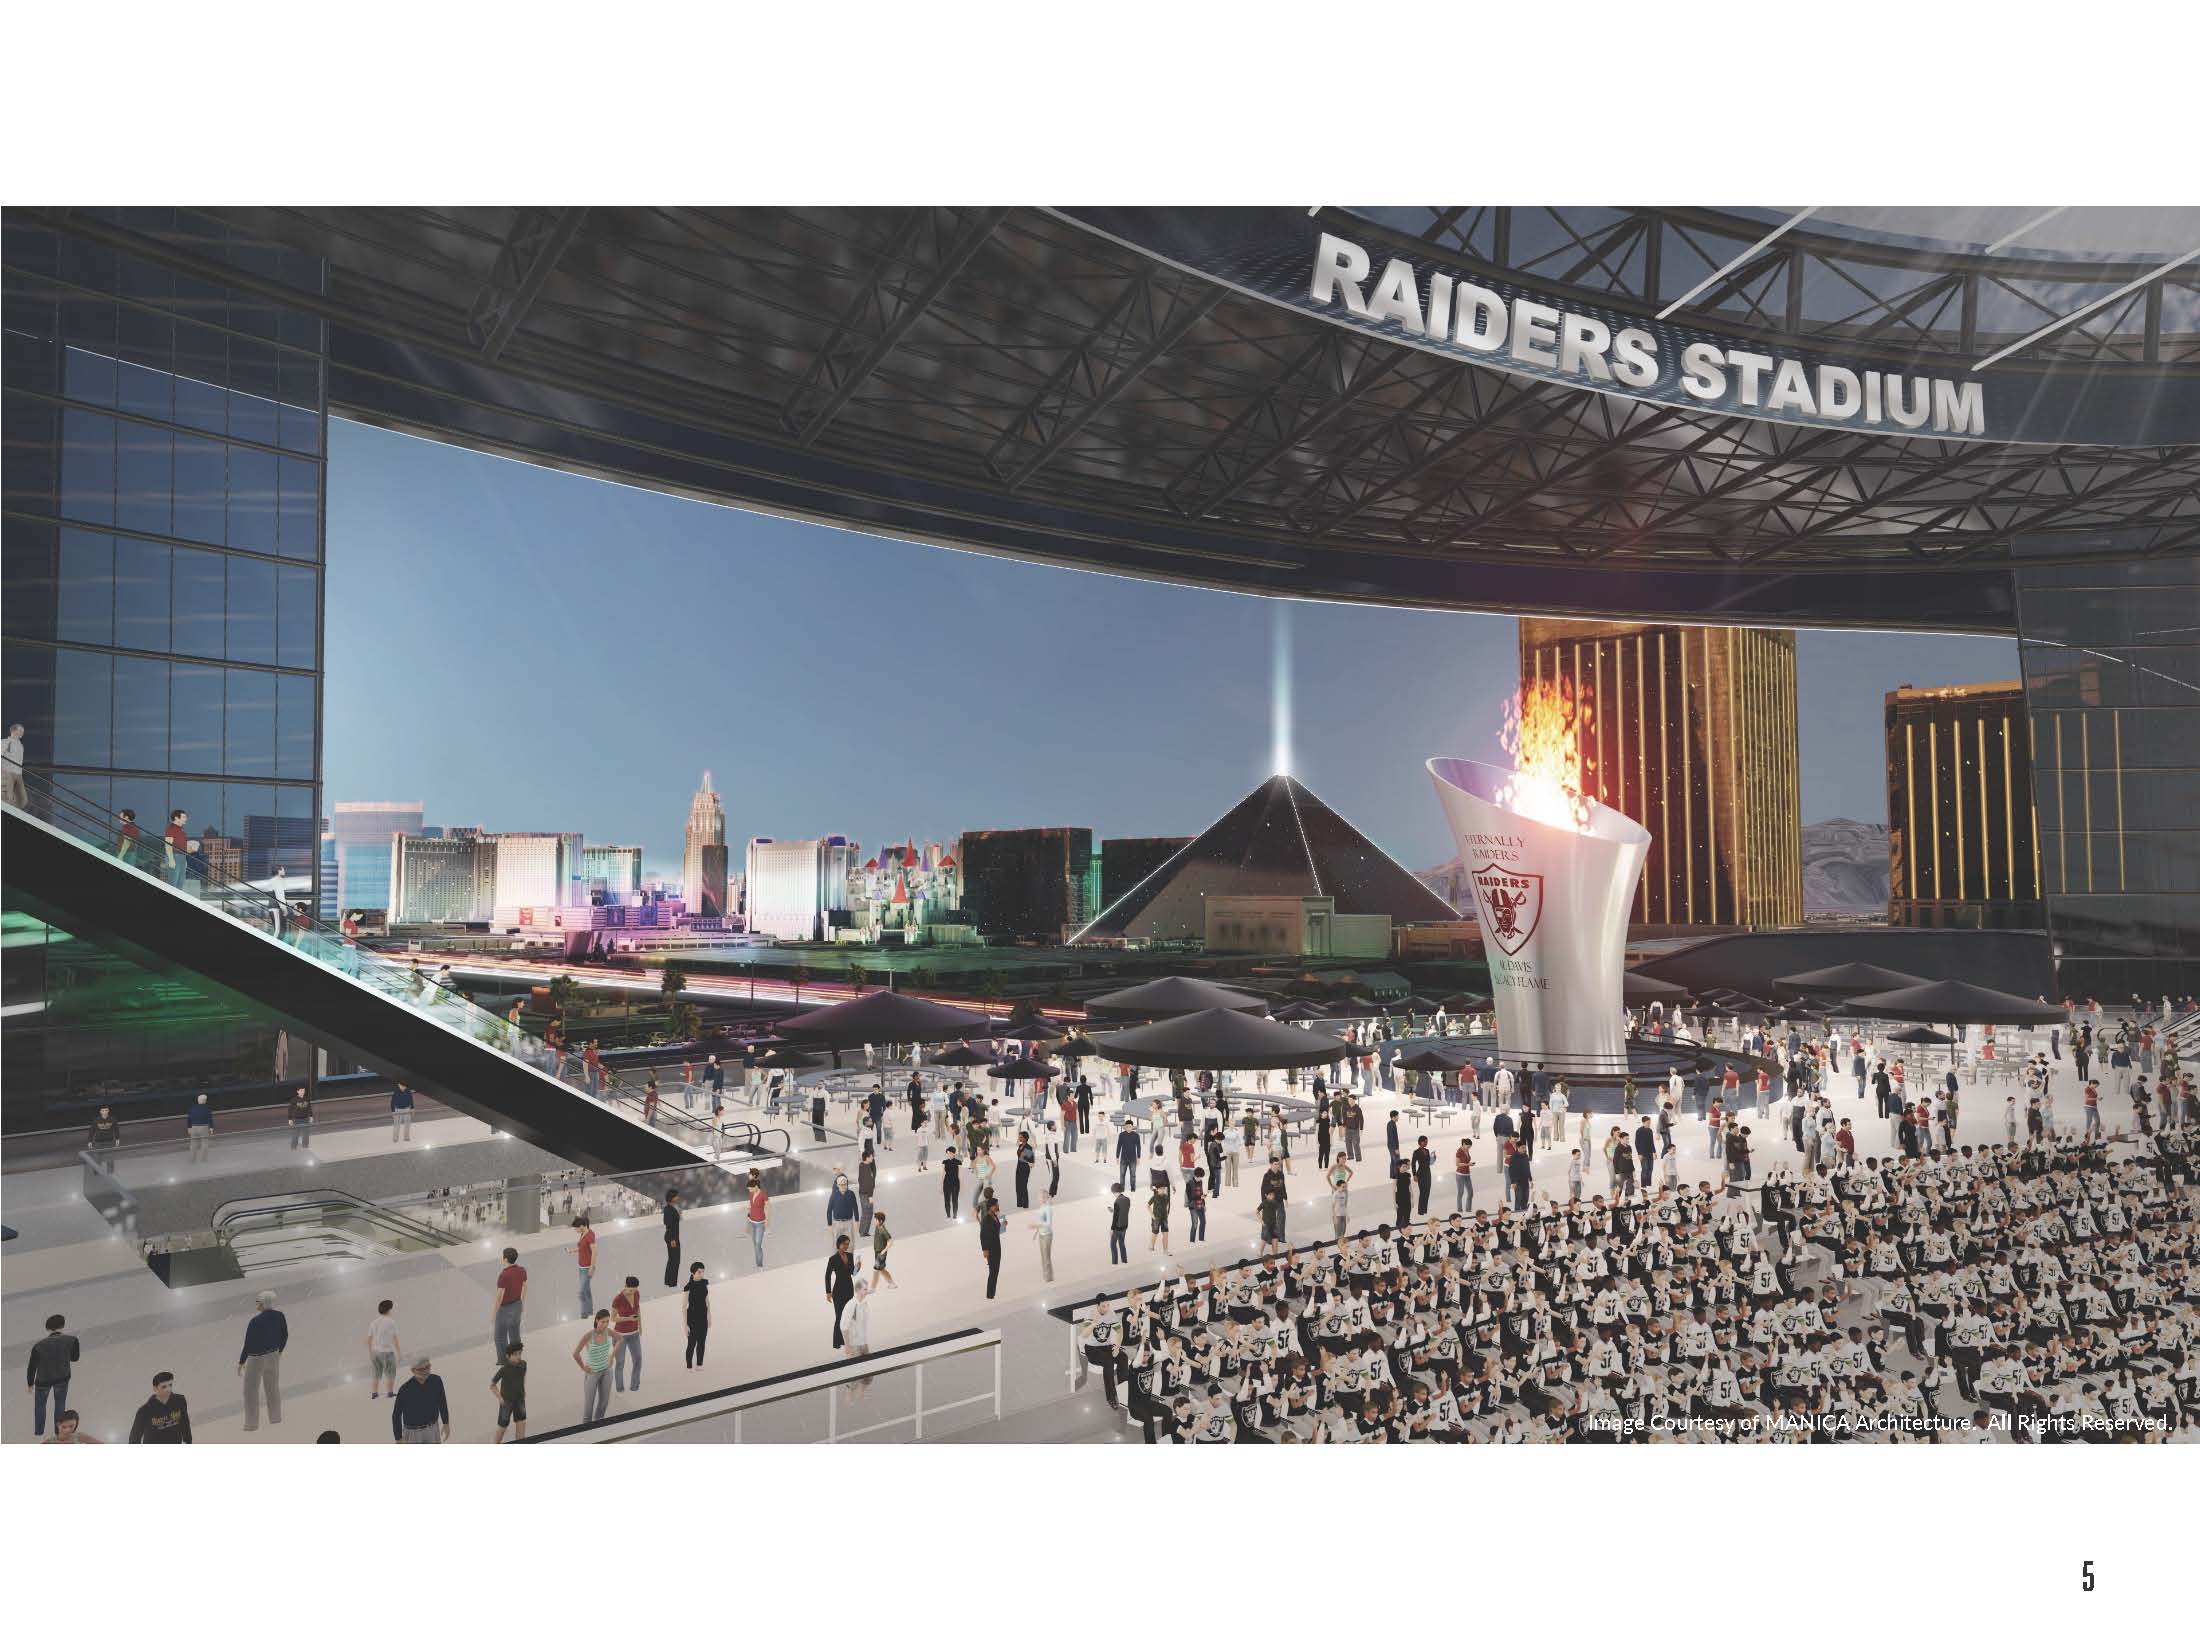 Oakland Raiders pitch a $1.9 billion Las Vegas stadium - Archpaper.com2200 x 1650